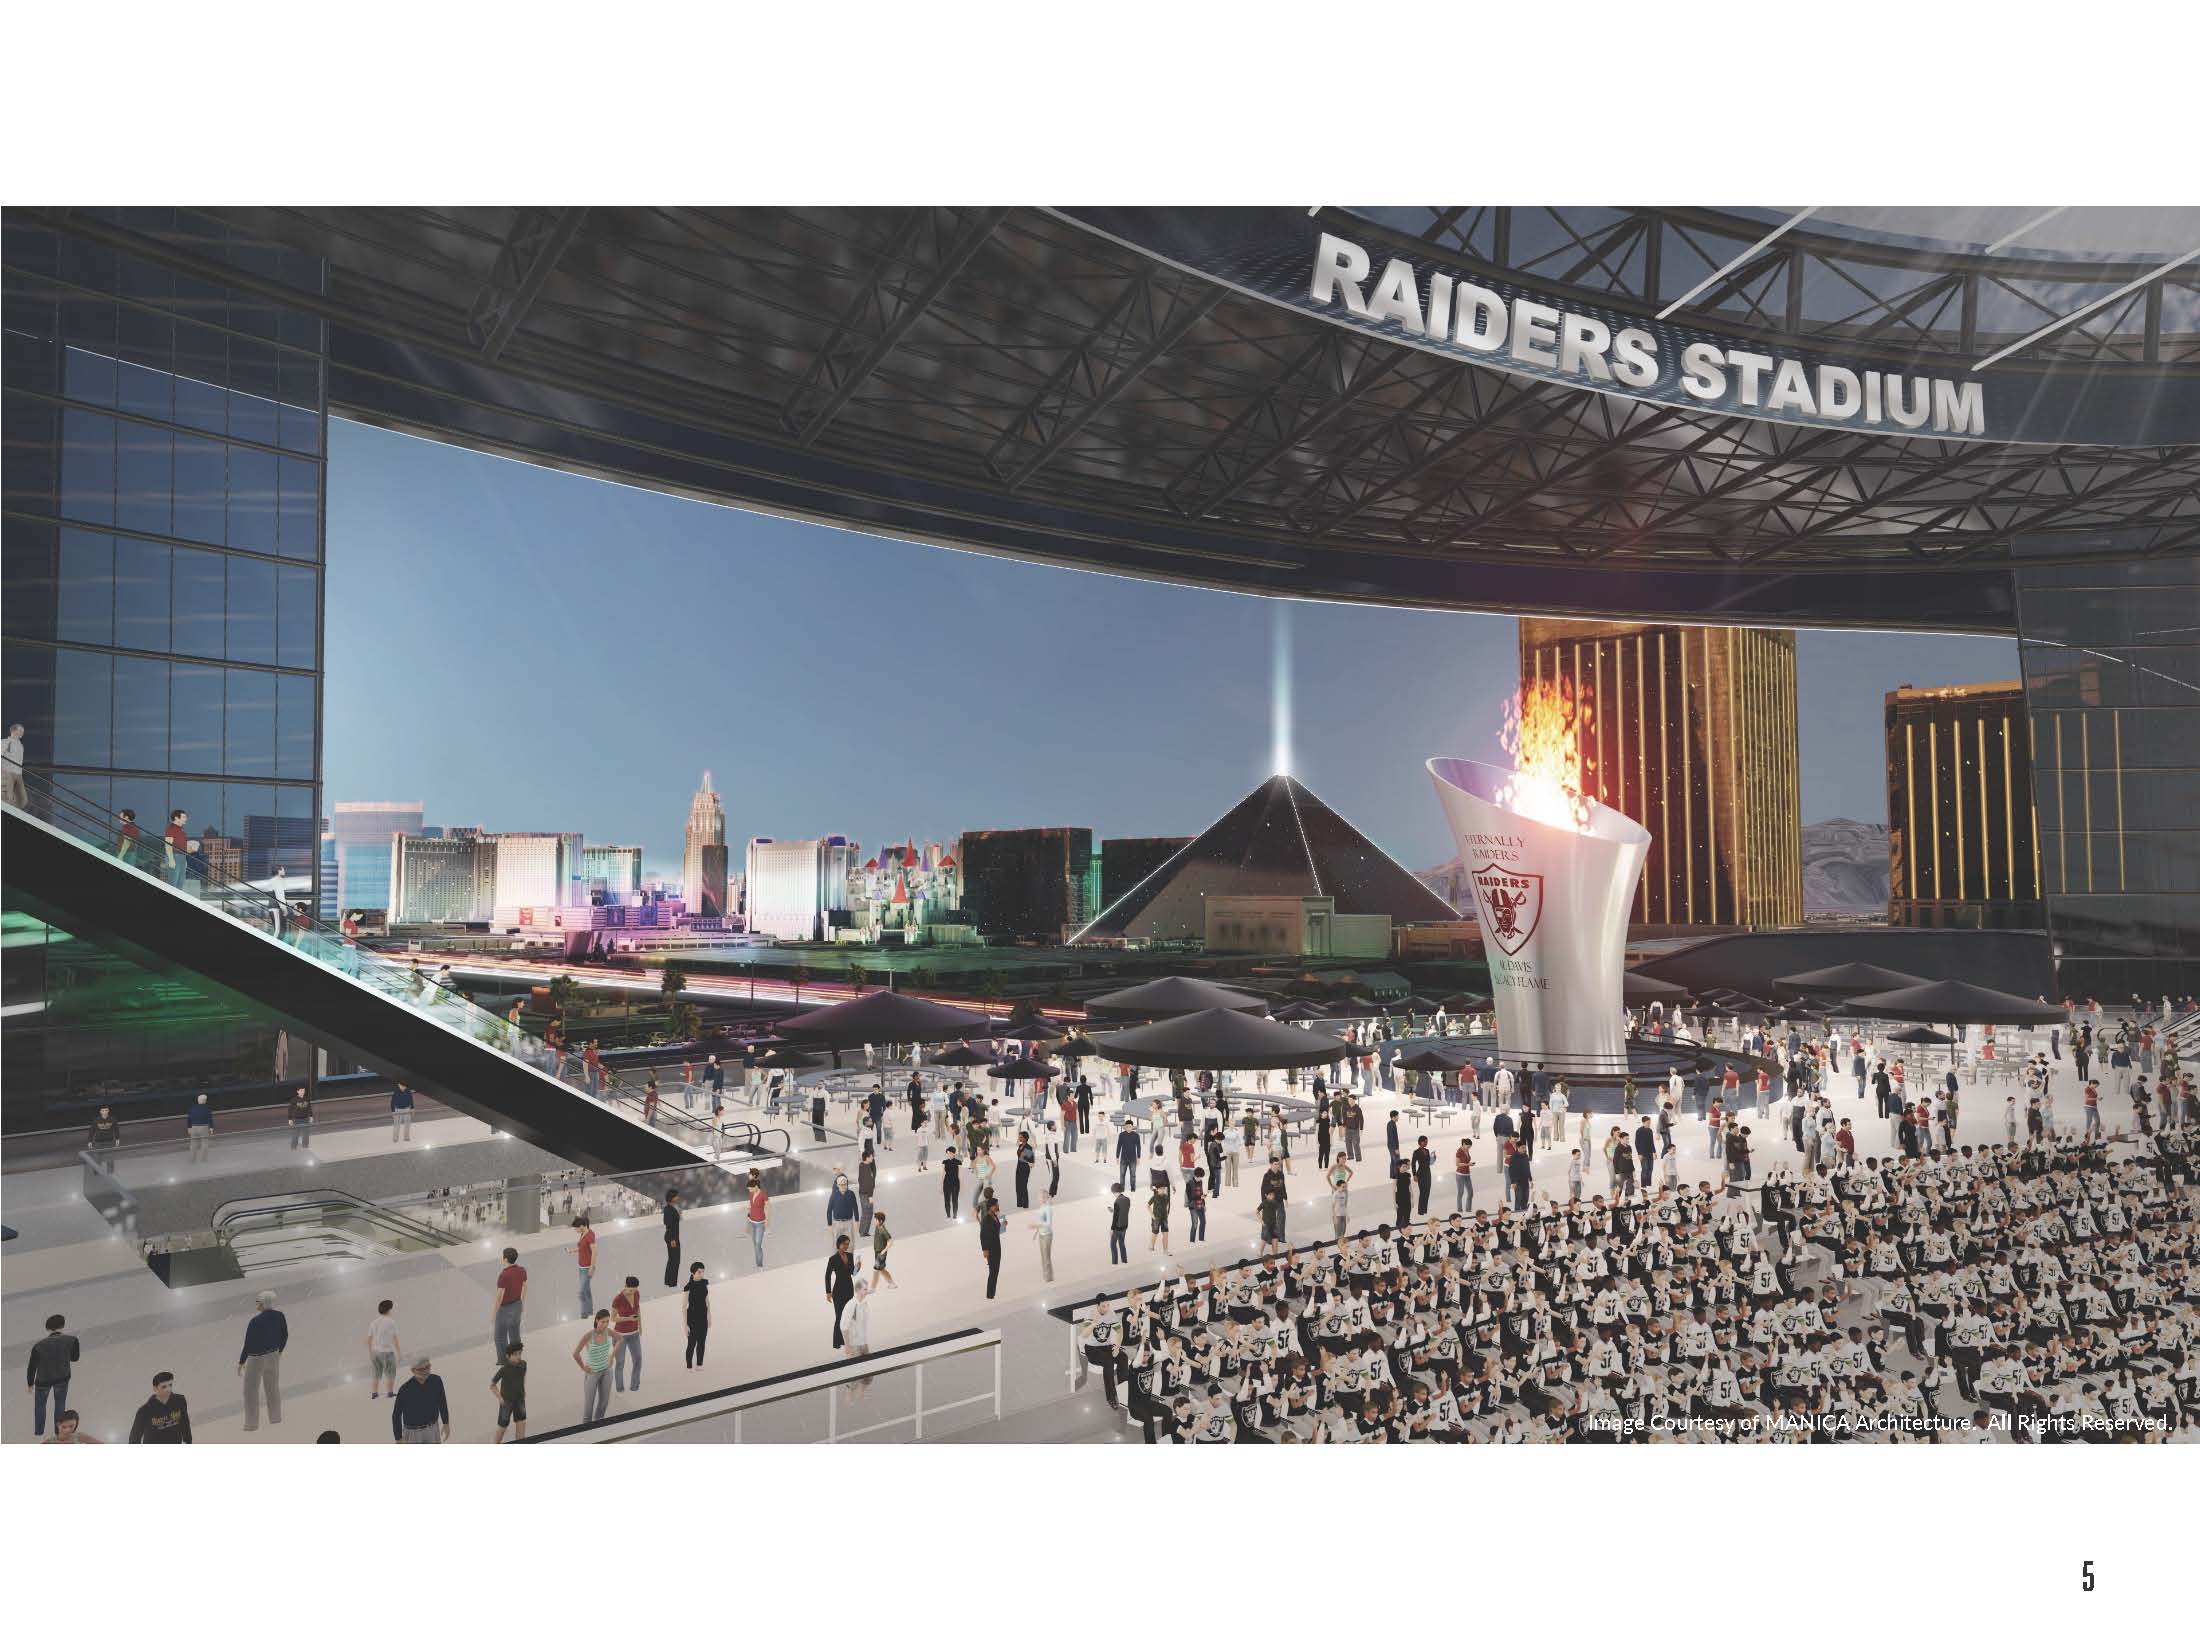 Oakland Raiders pitch a $1.9 billion Las Vegas stadium - Archpaper.com2200 x 1650